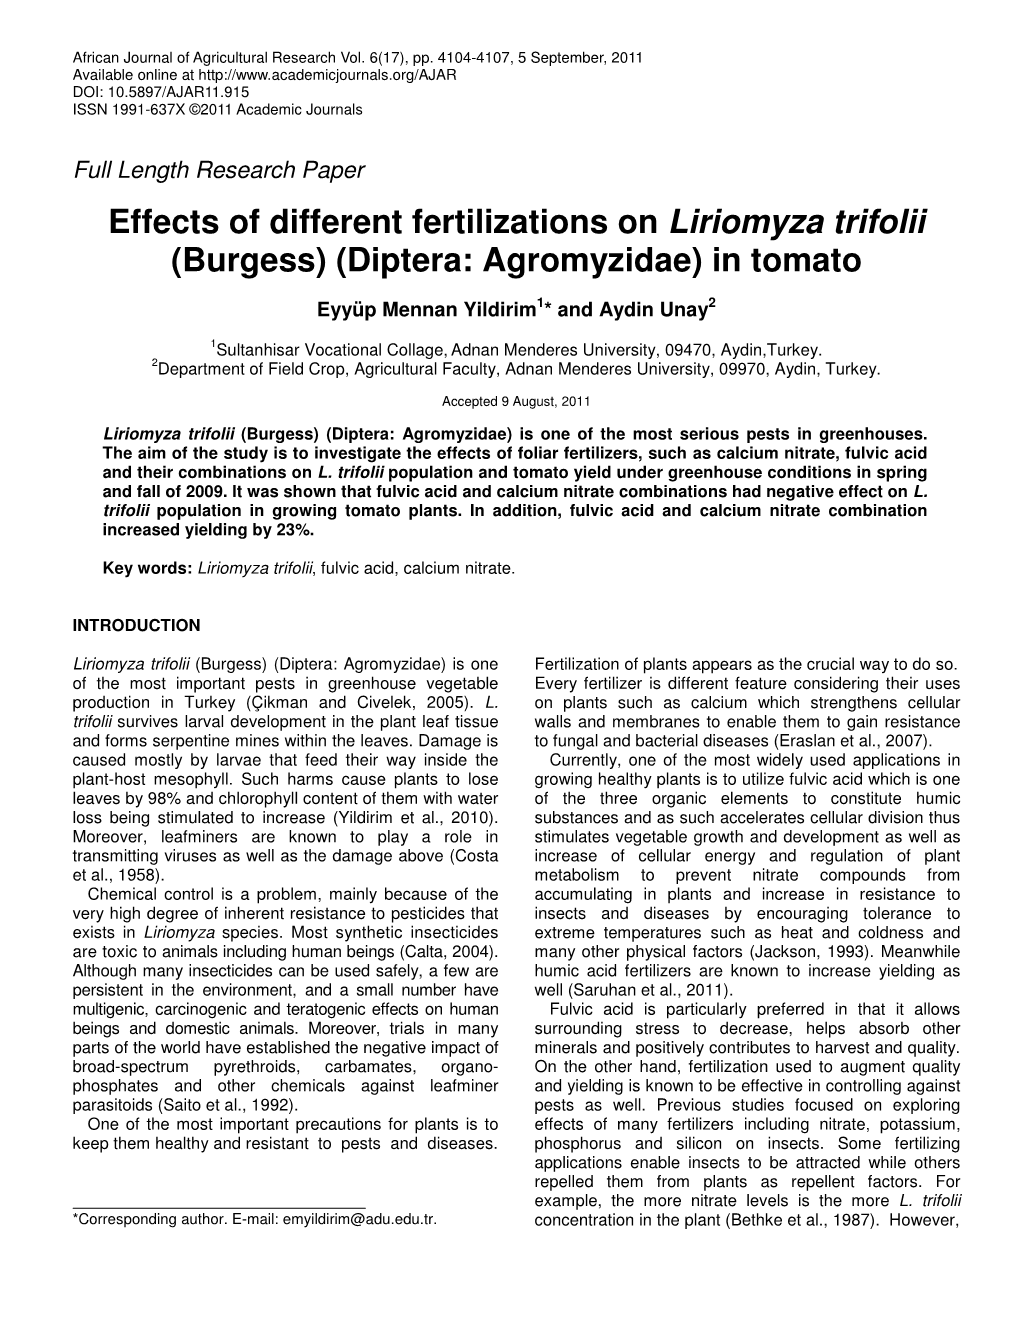 Effects of Different Fertilizations on Liriomyza Trifolii (Burgess) (Diptera: Agromyzidae) in Tomato